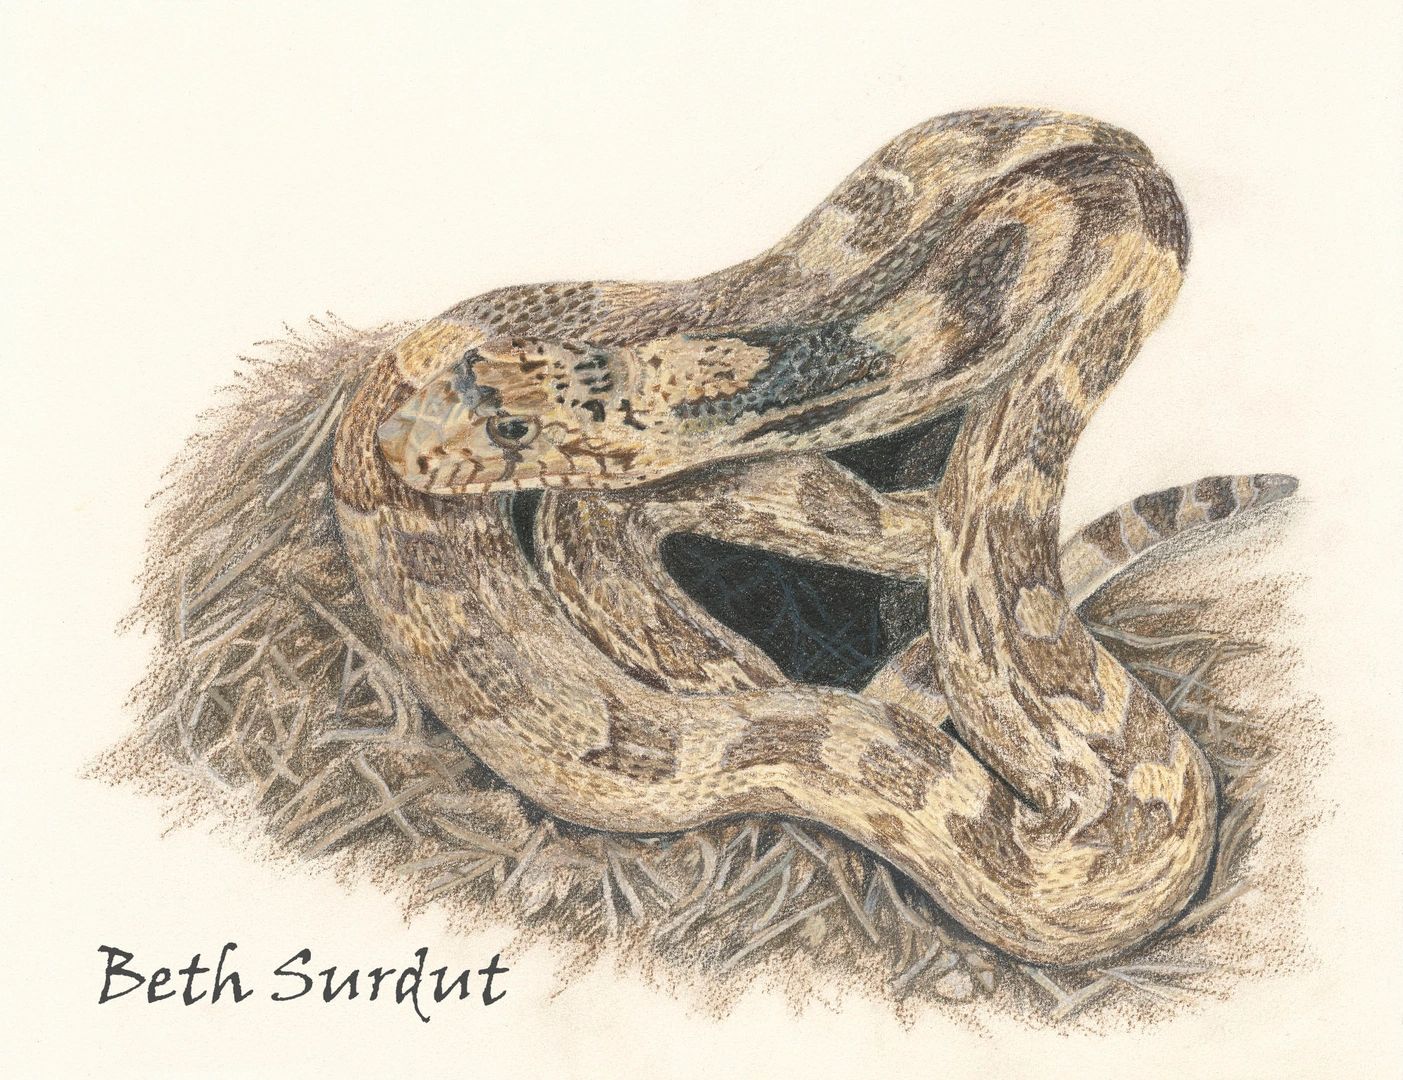 Gopher snake drawing by Beth Surdut